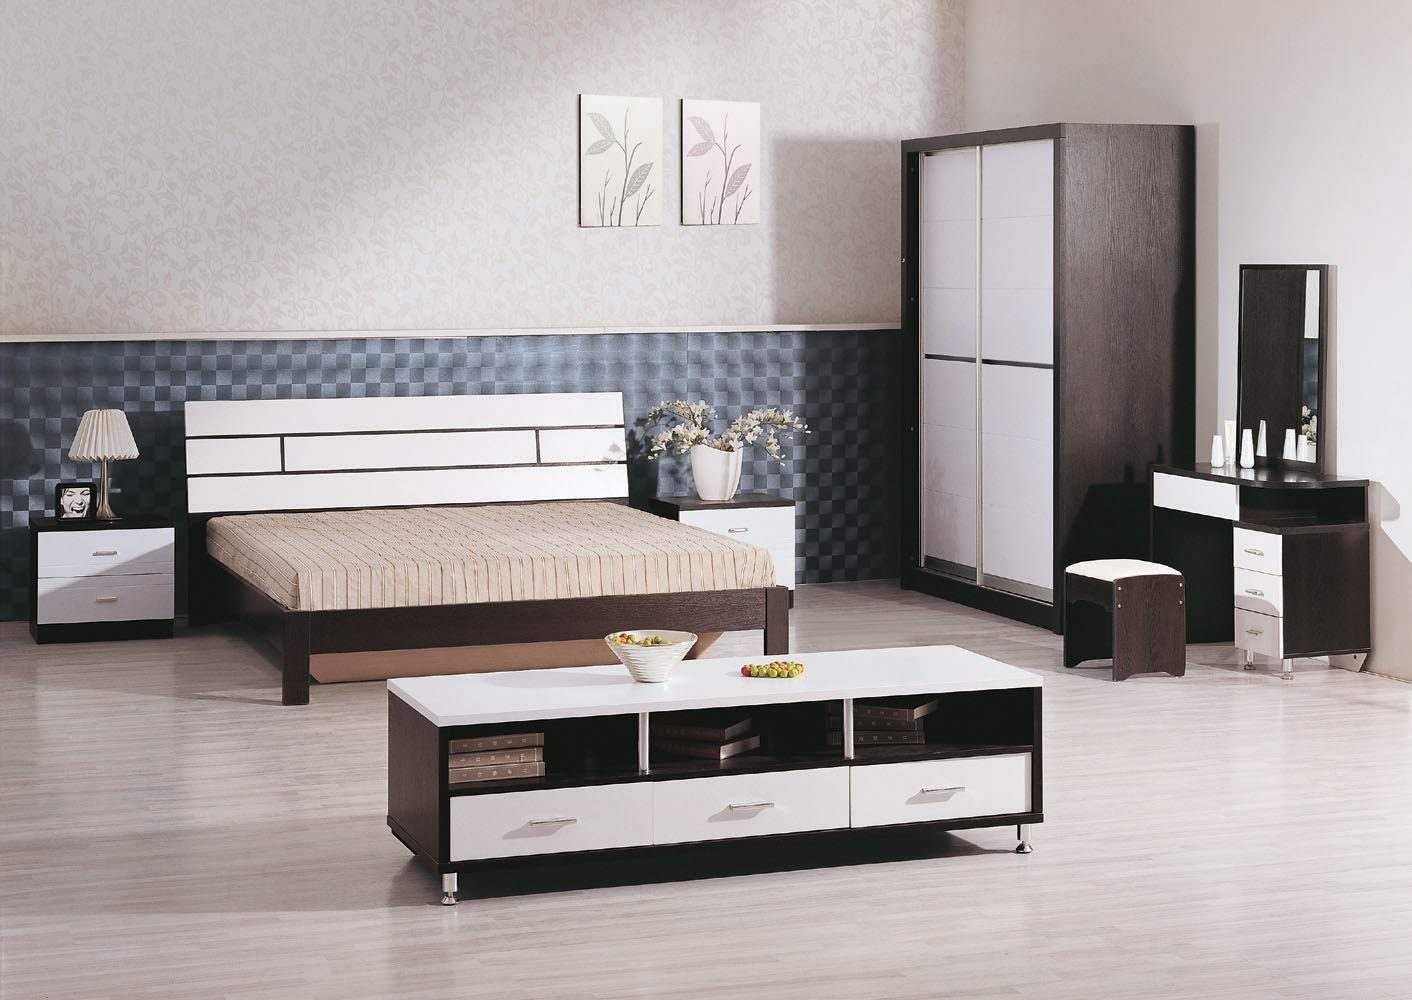 Muebles modernos para dormitorios